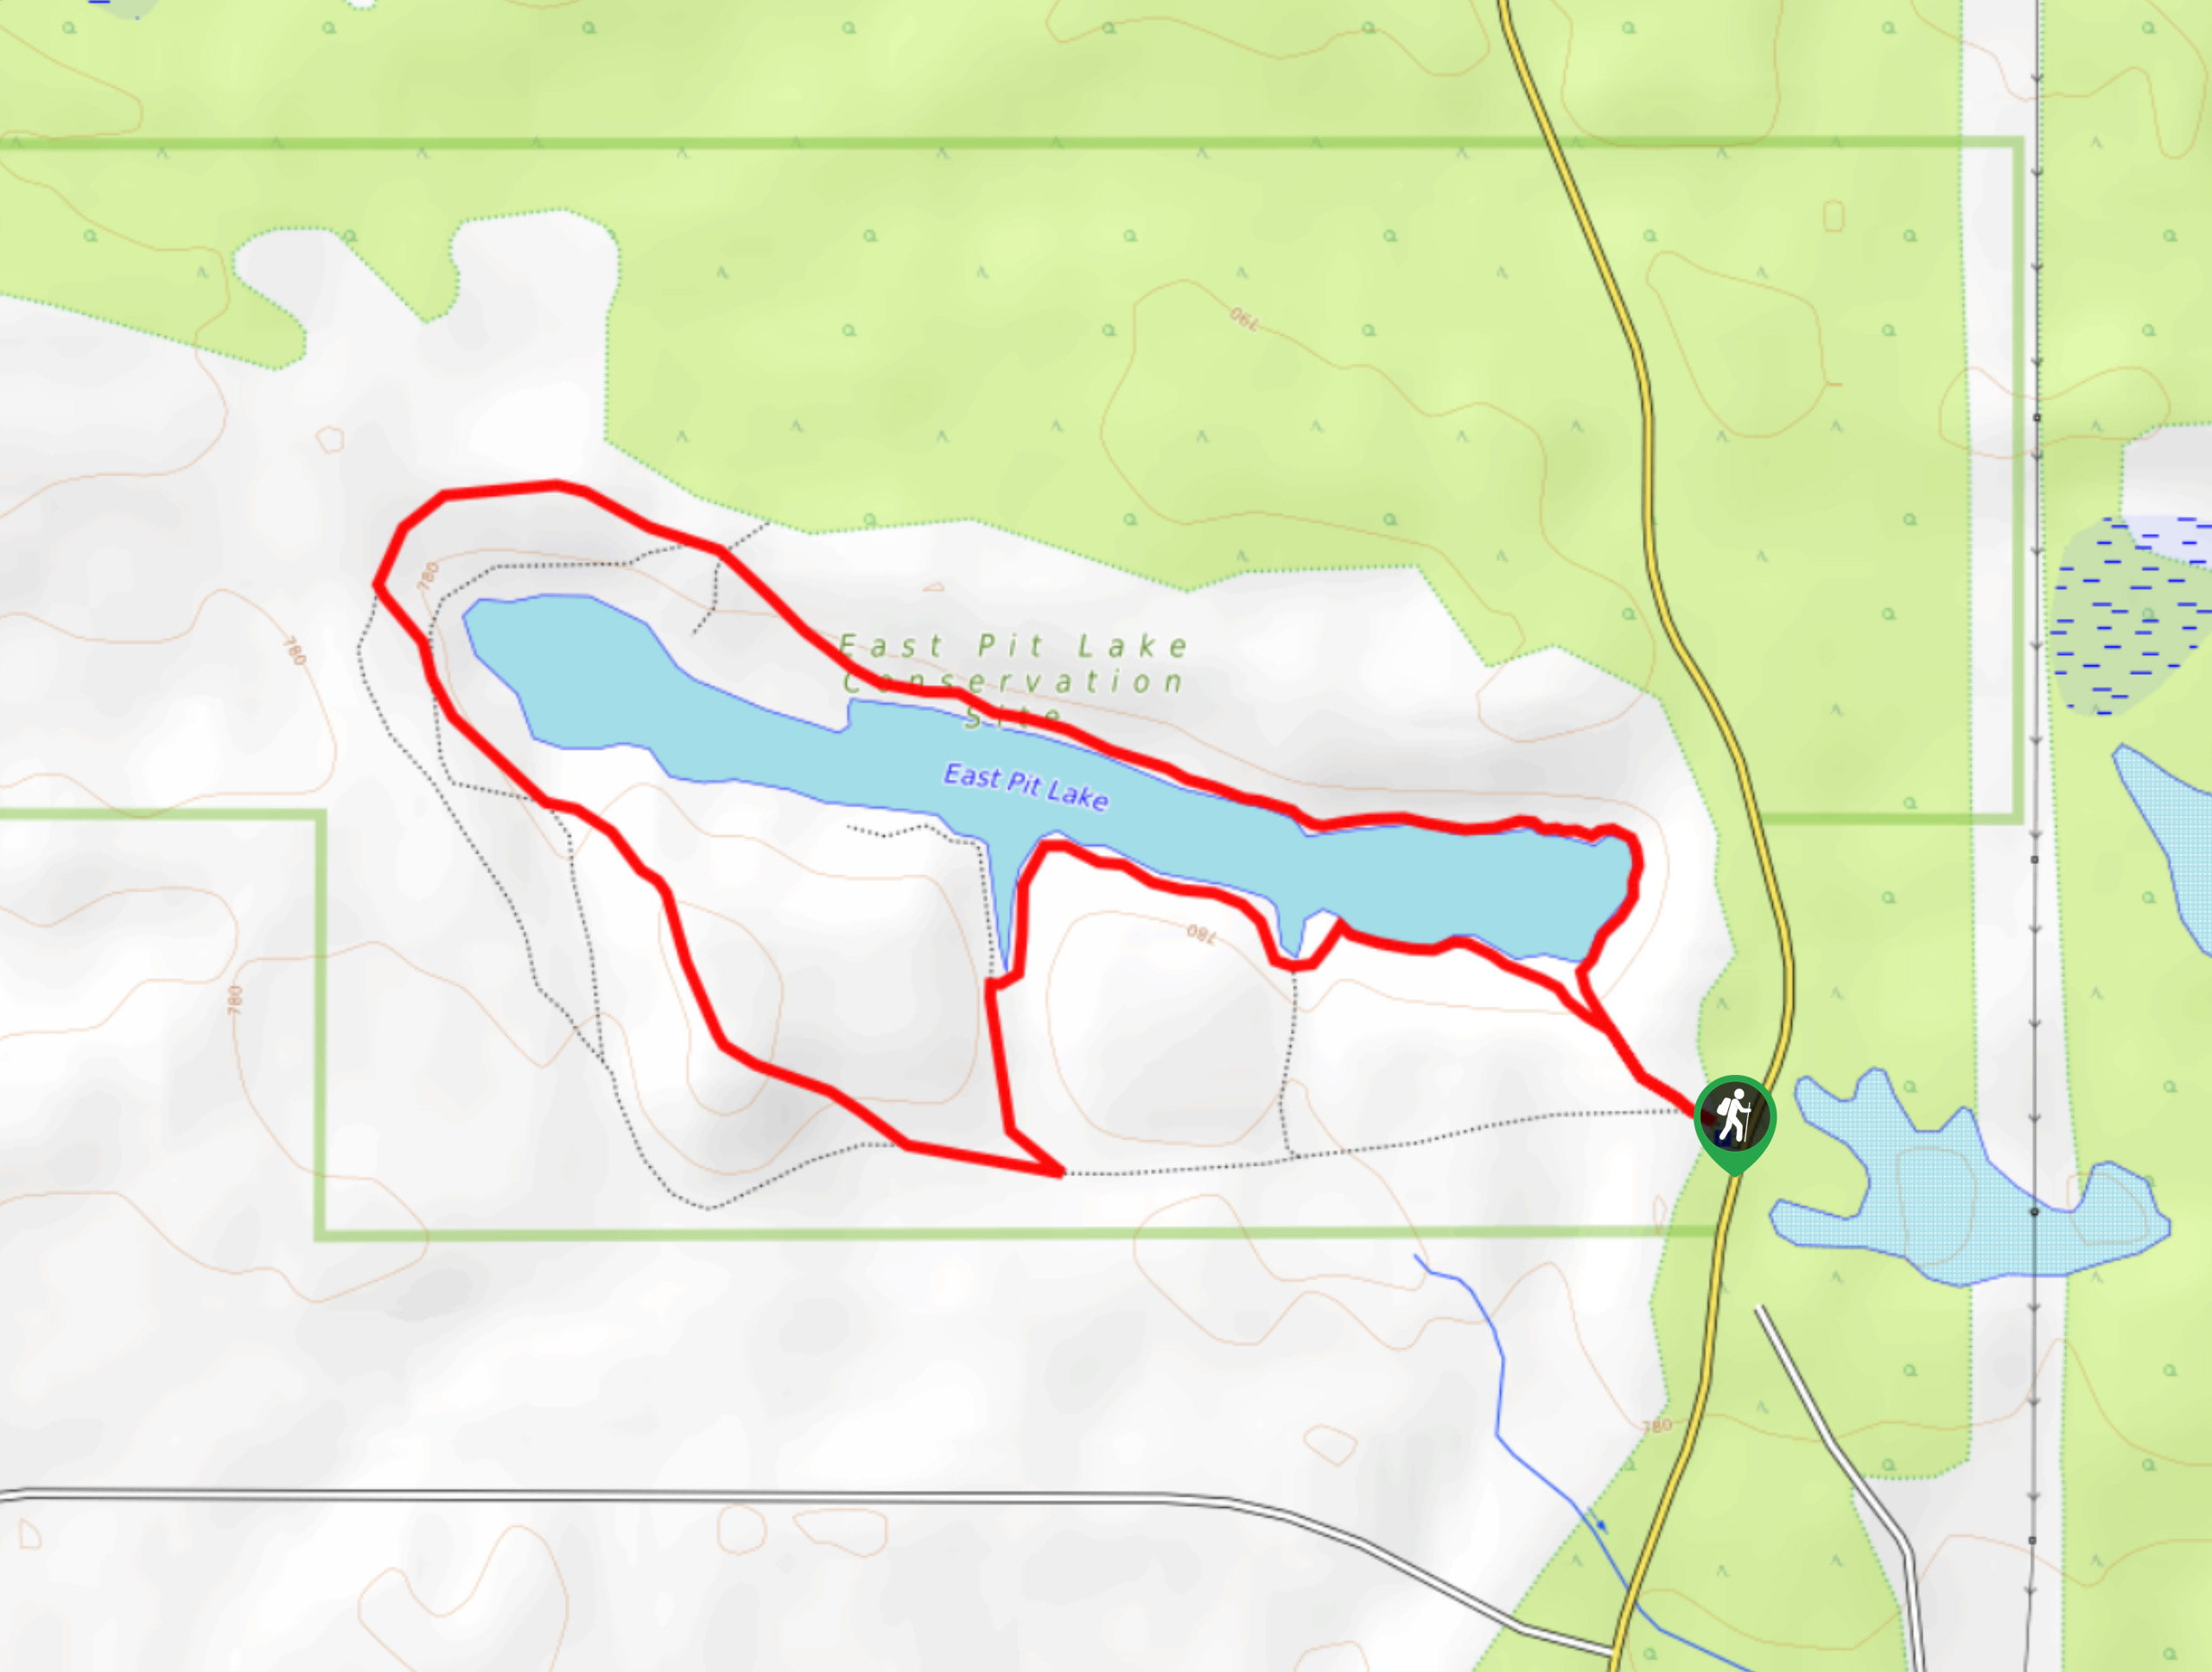 East Pit Lake Trail Map